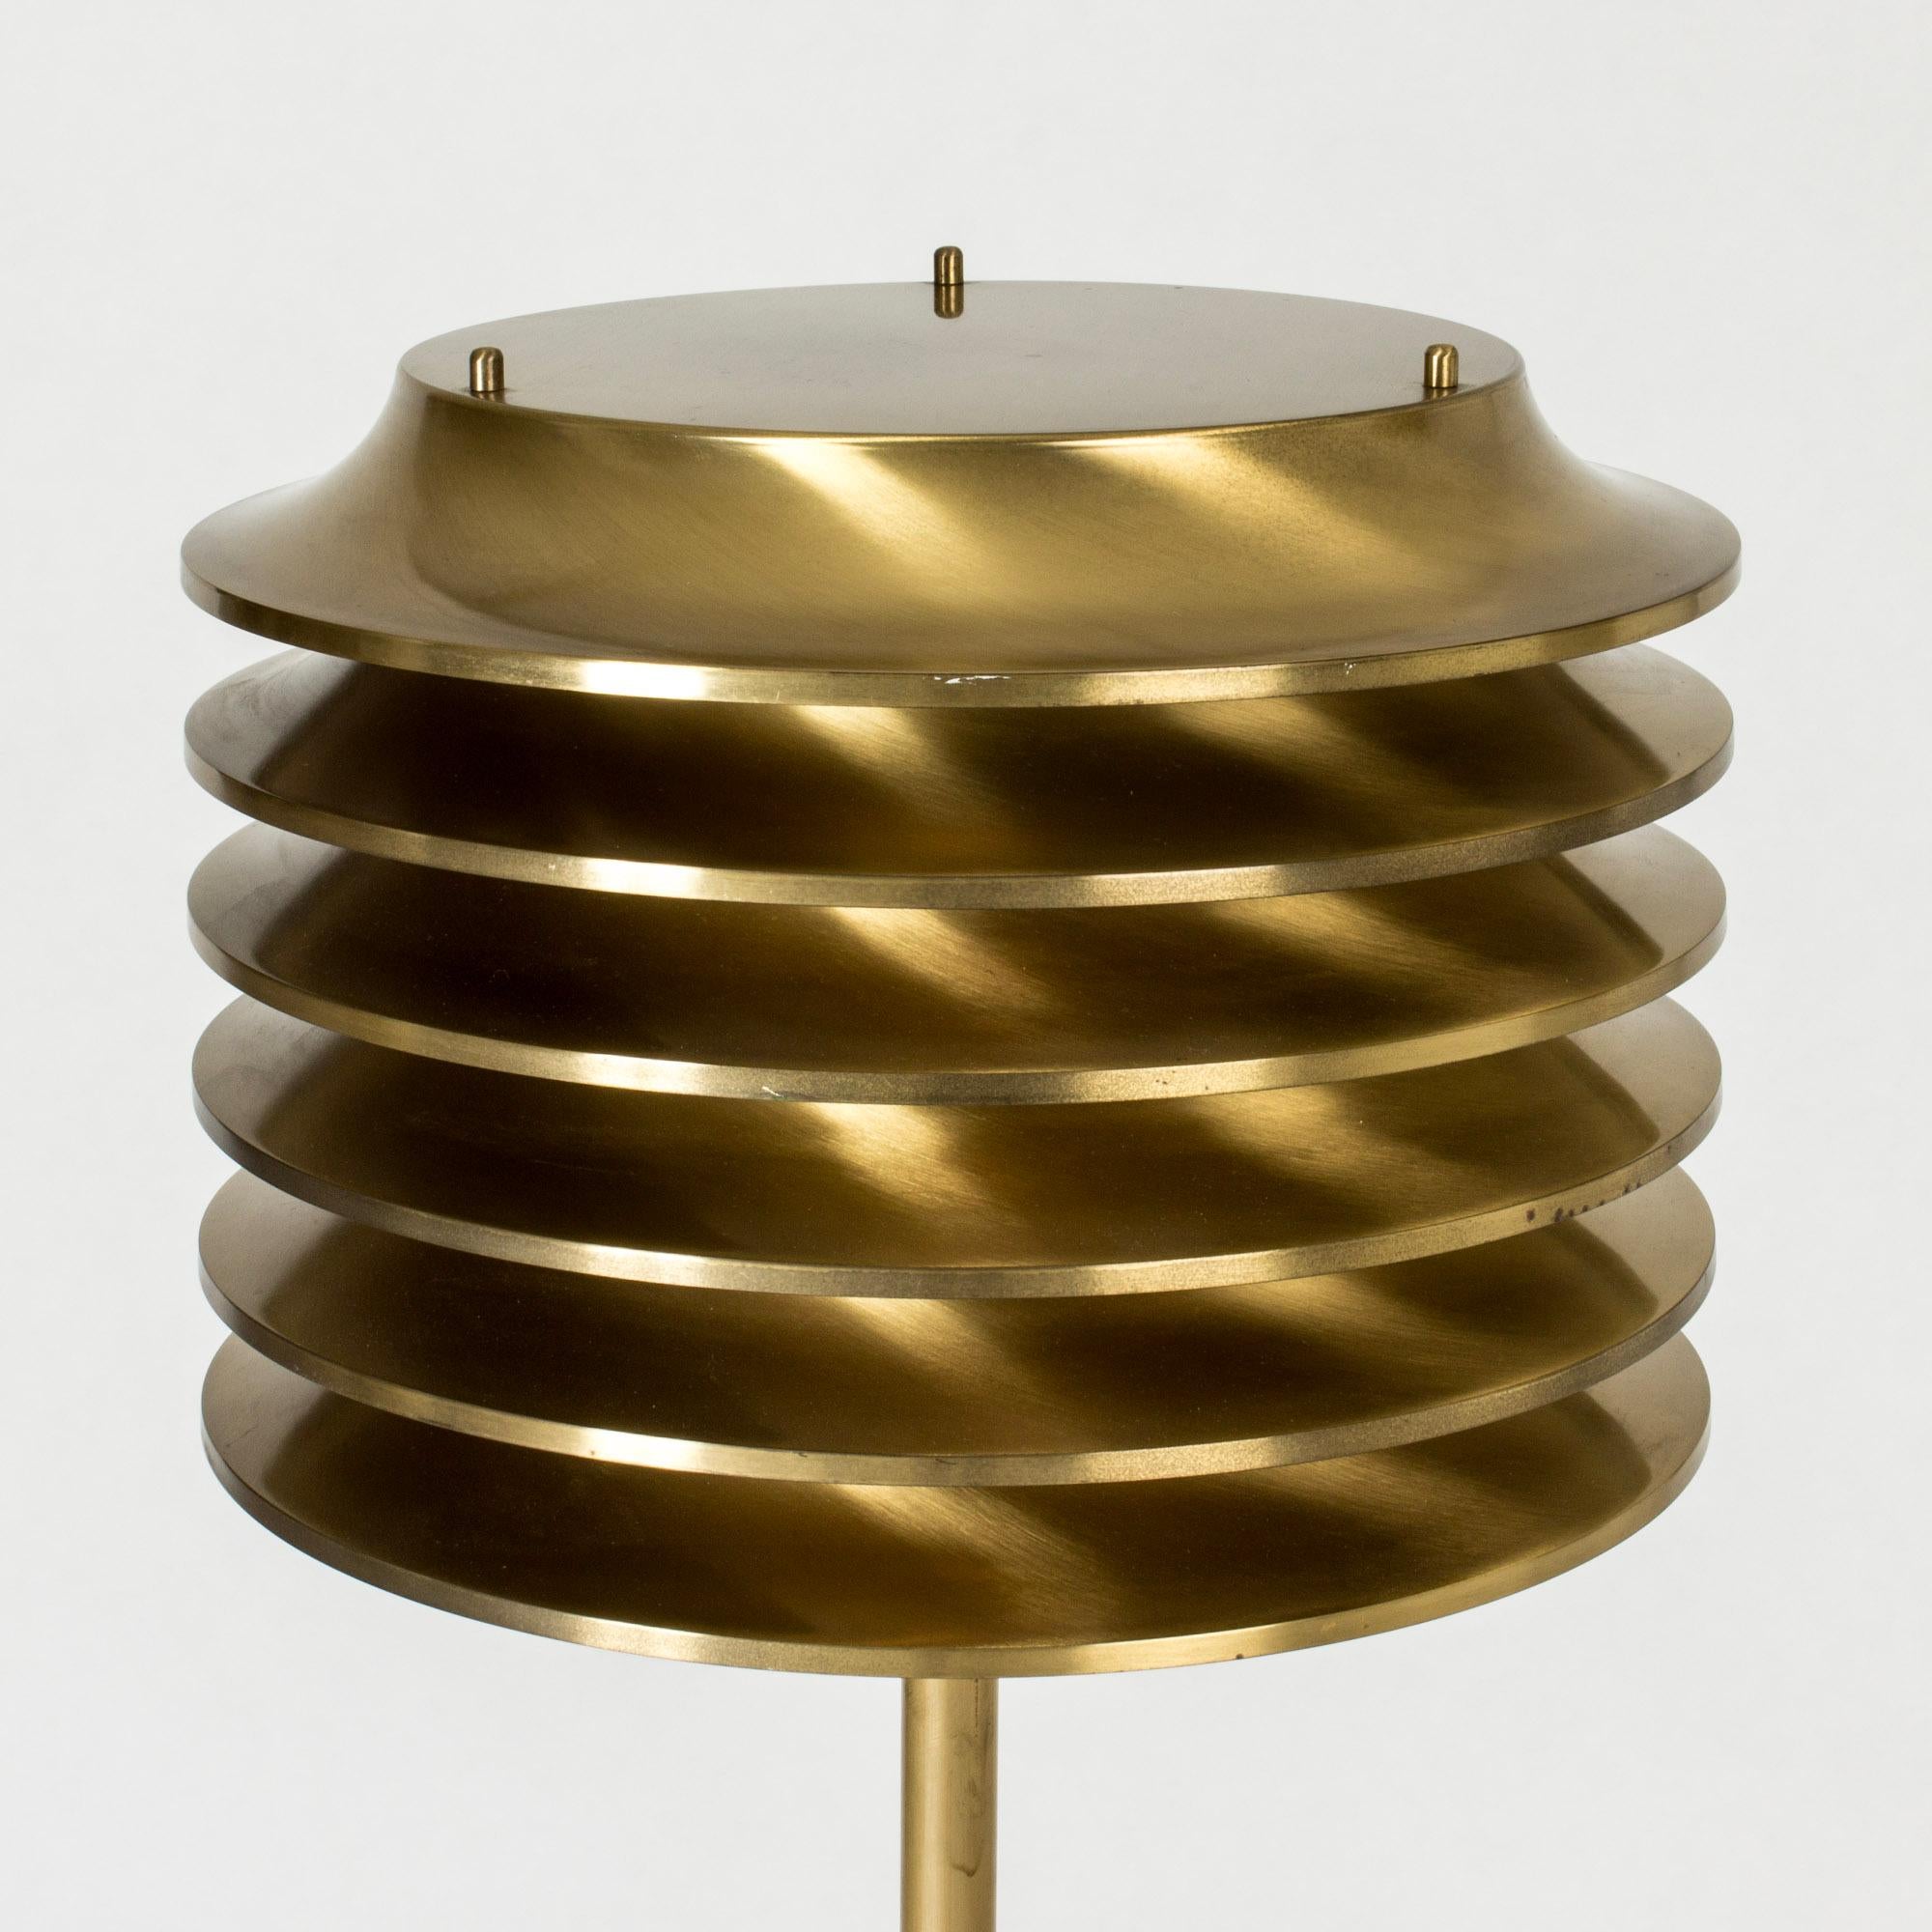 Late 20th Century Finnish Midcentury Modern Brass Floor Lamp by Kai Ruokonen for Orno, 1970s For Sale